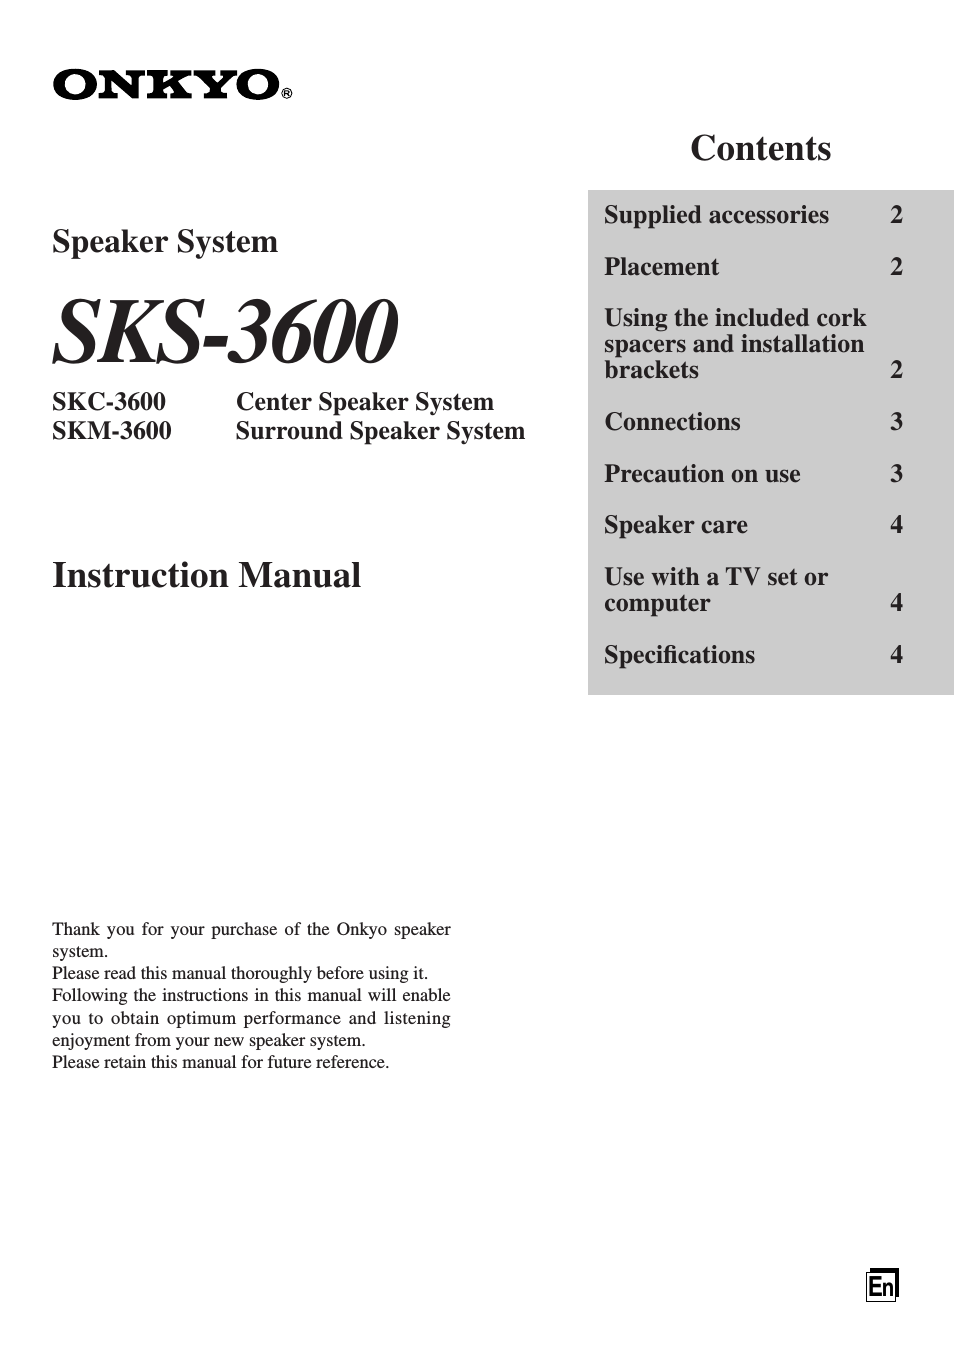 SKM-3600